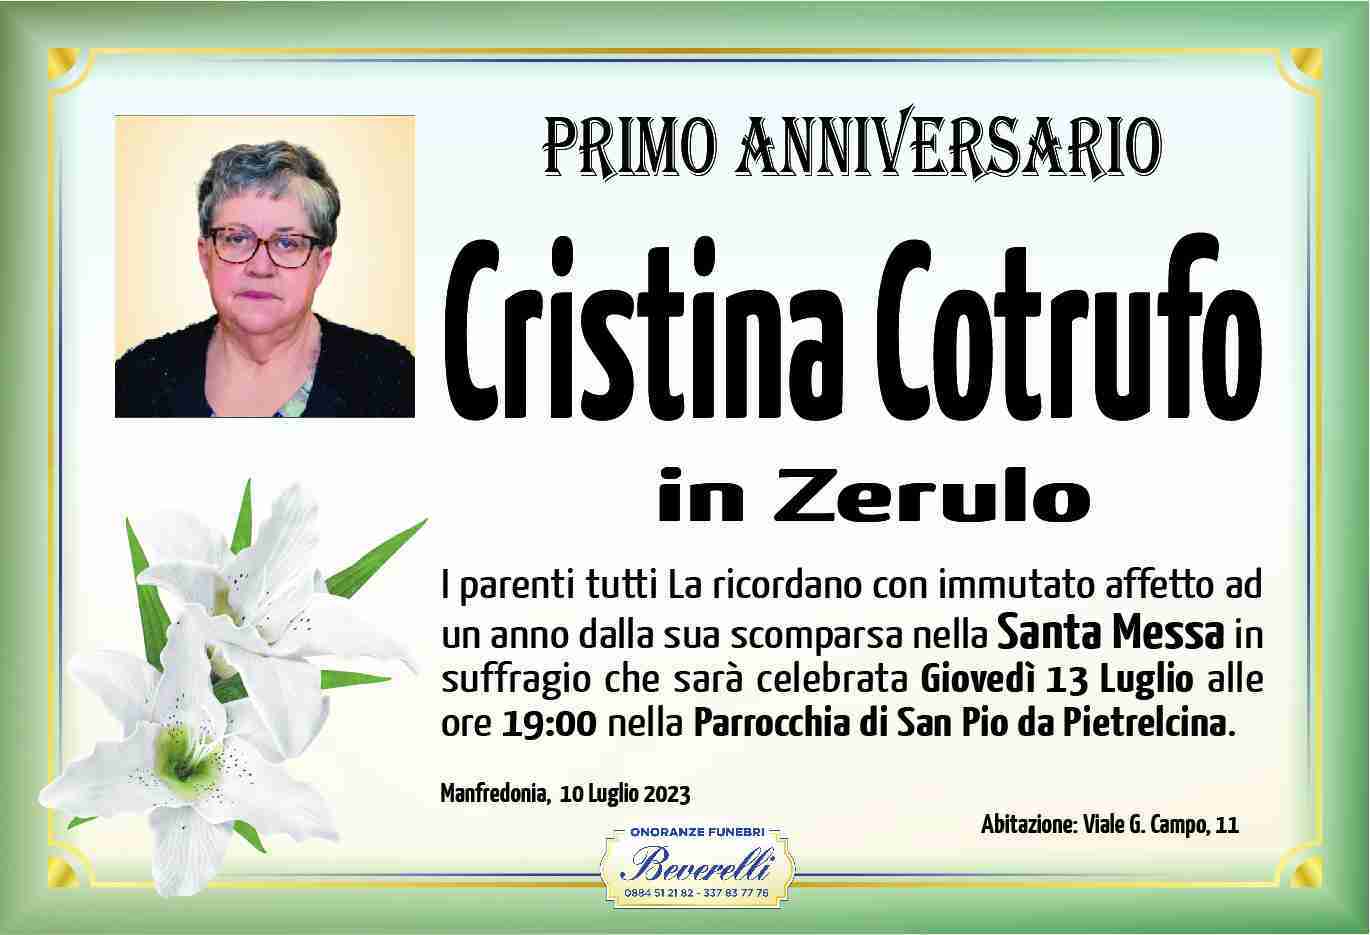 Cristina Cotrufo